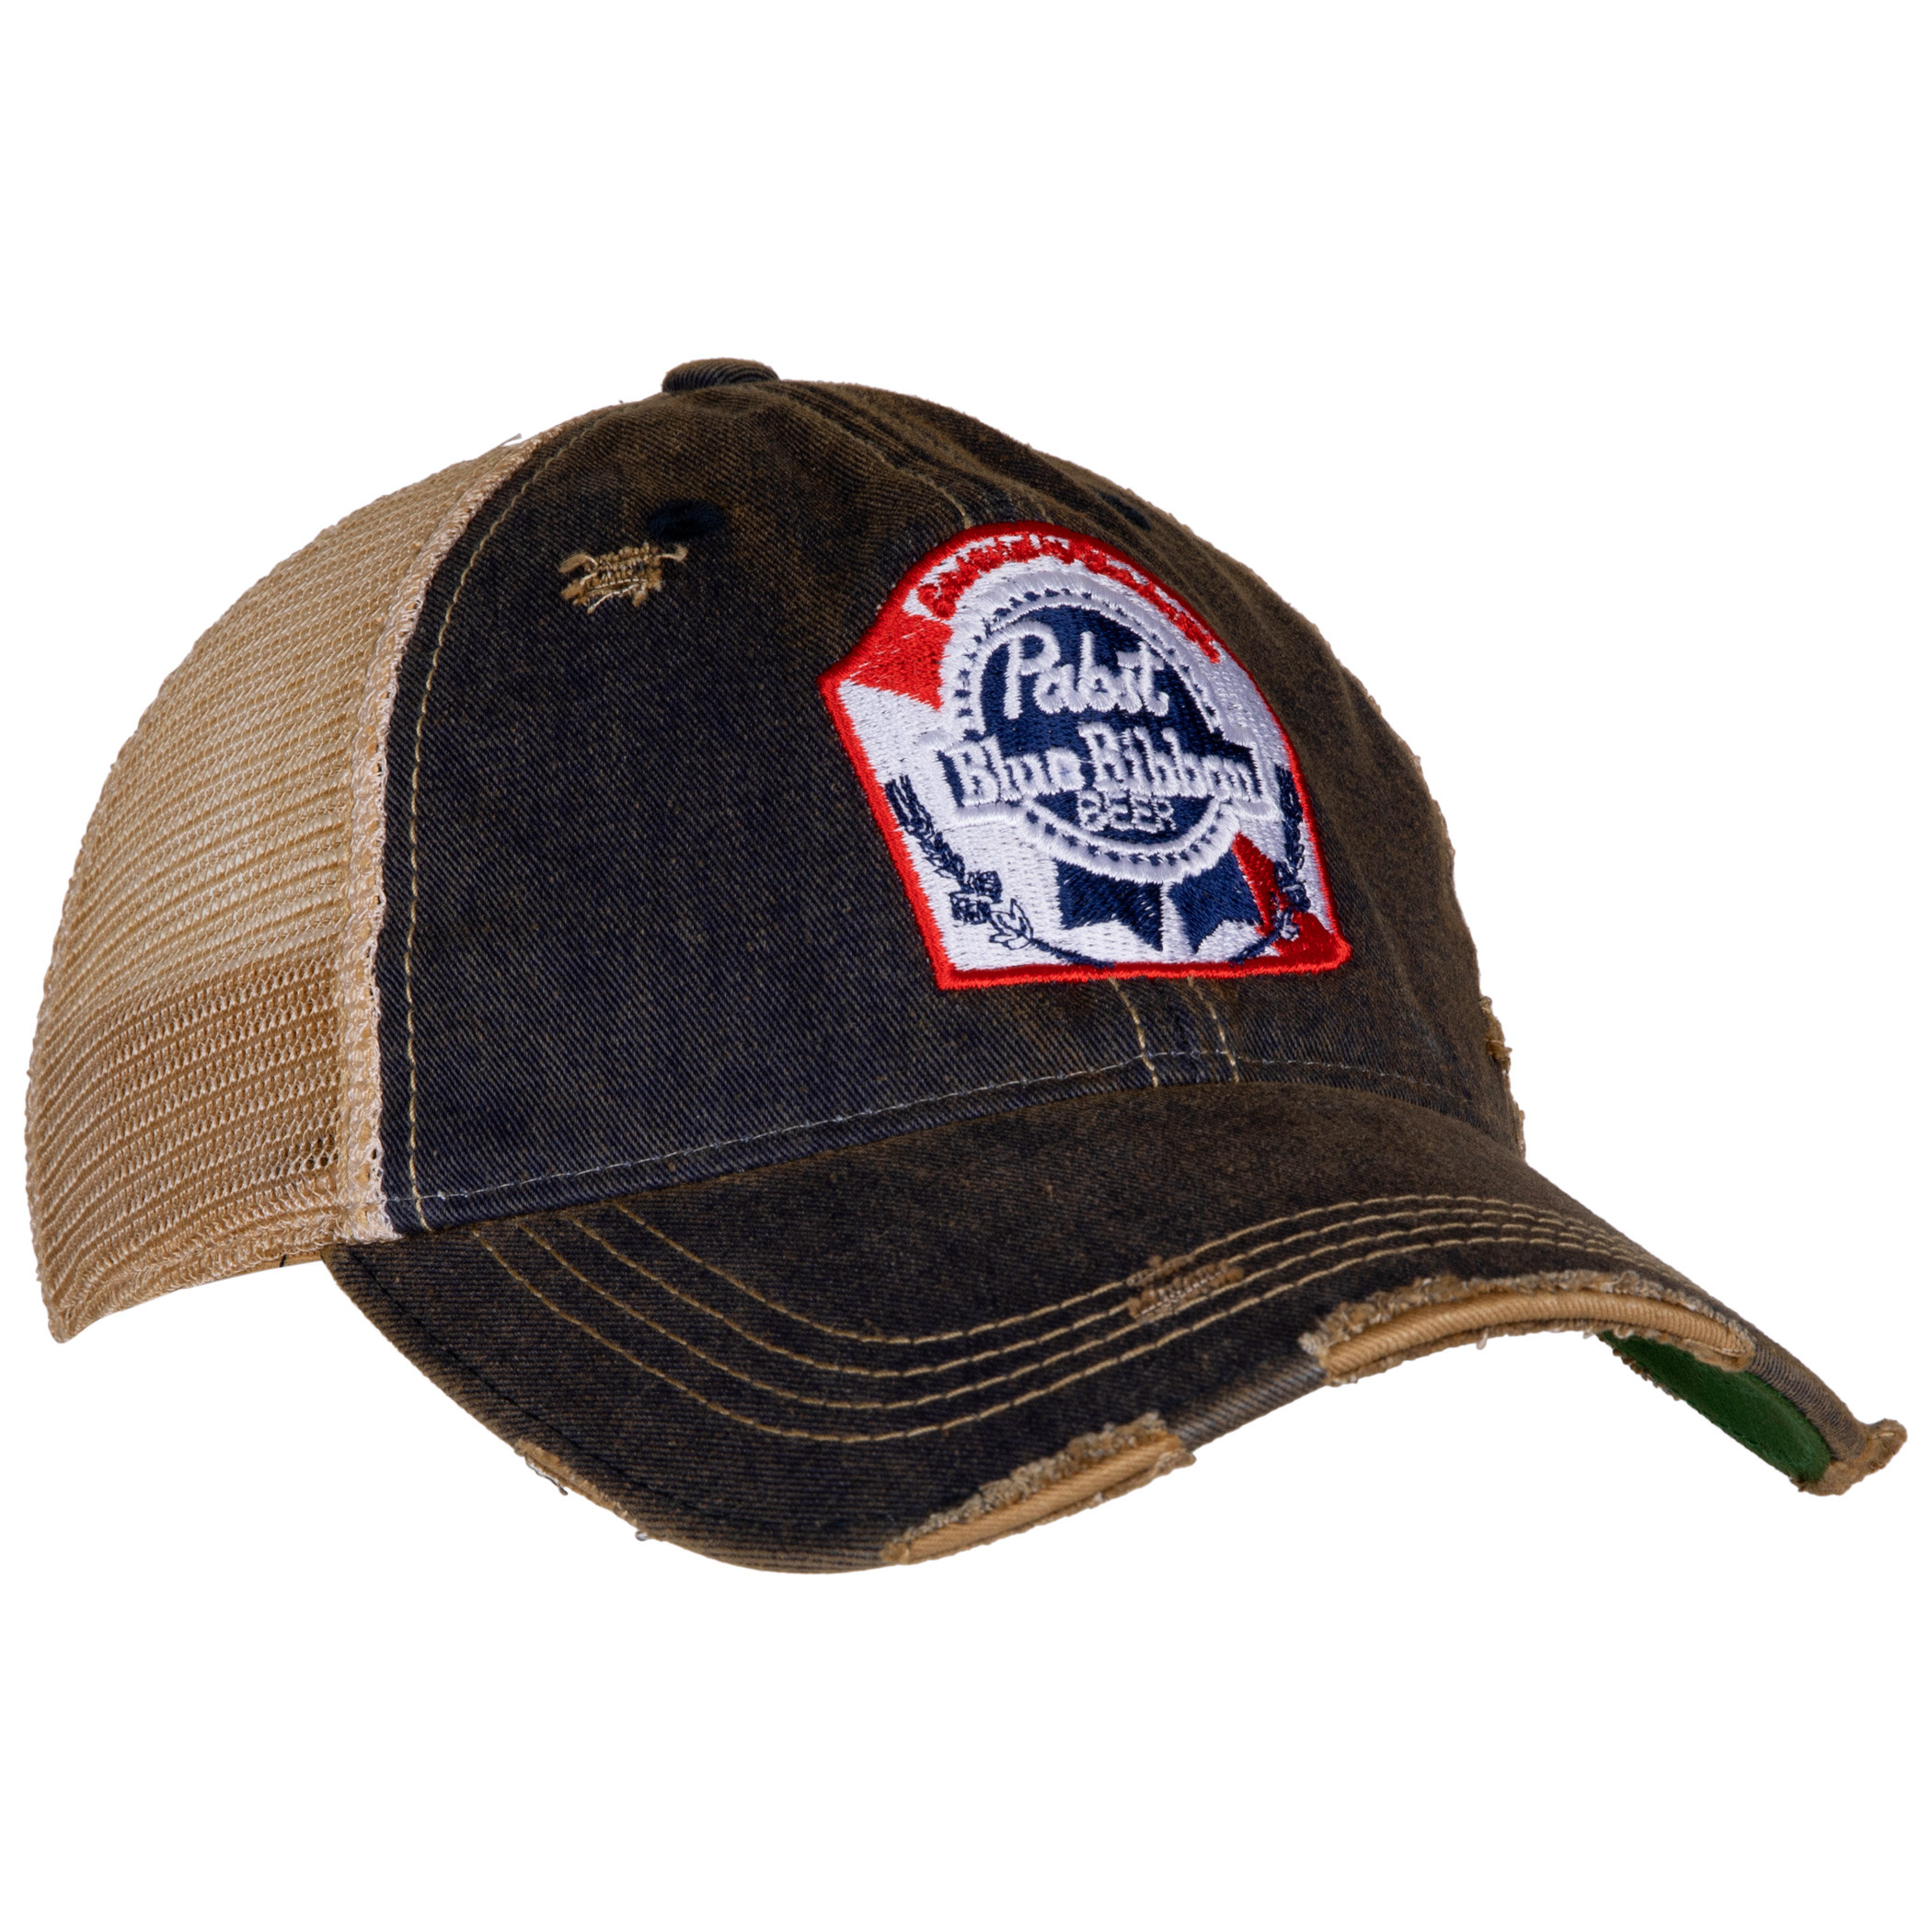 Pabst Blue Ribbon Brown Retro Brand Distressed PBR Trucker Hat